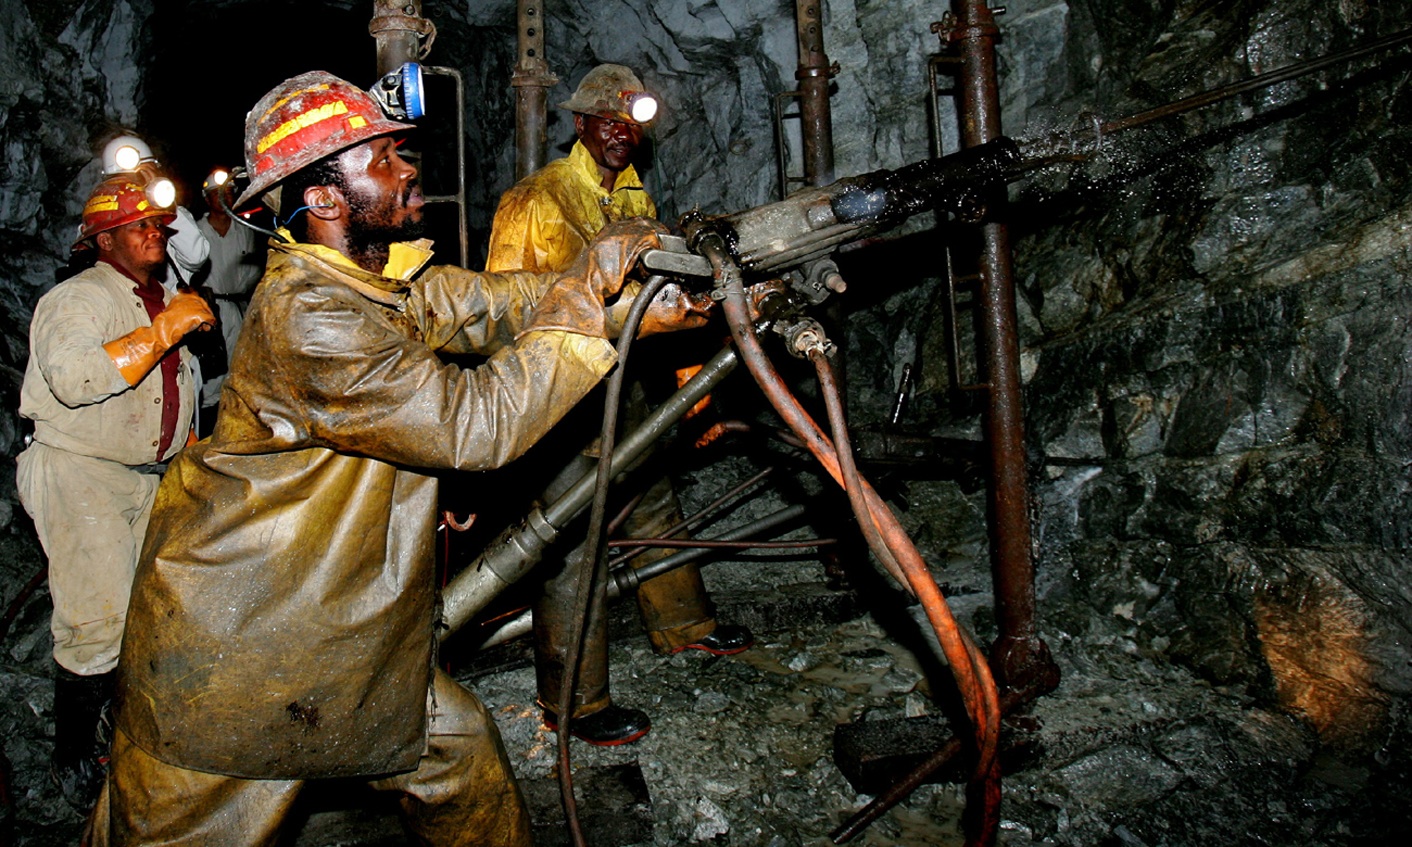 Mineworkers work deep underground at Harmony Gold Mine's Cooke shaft near Johannesburg, September 22, 2005.